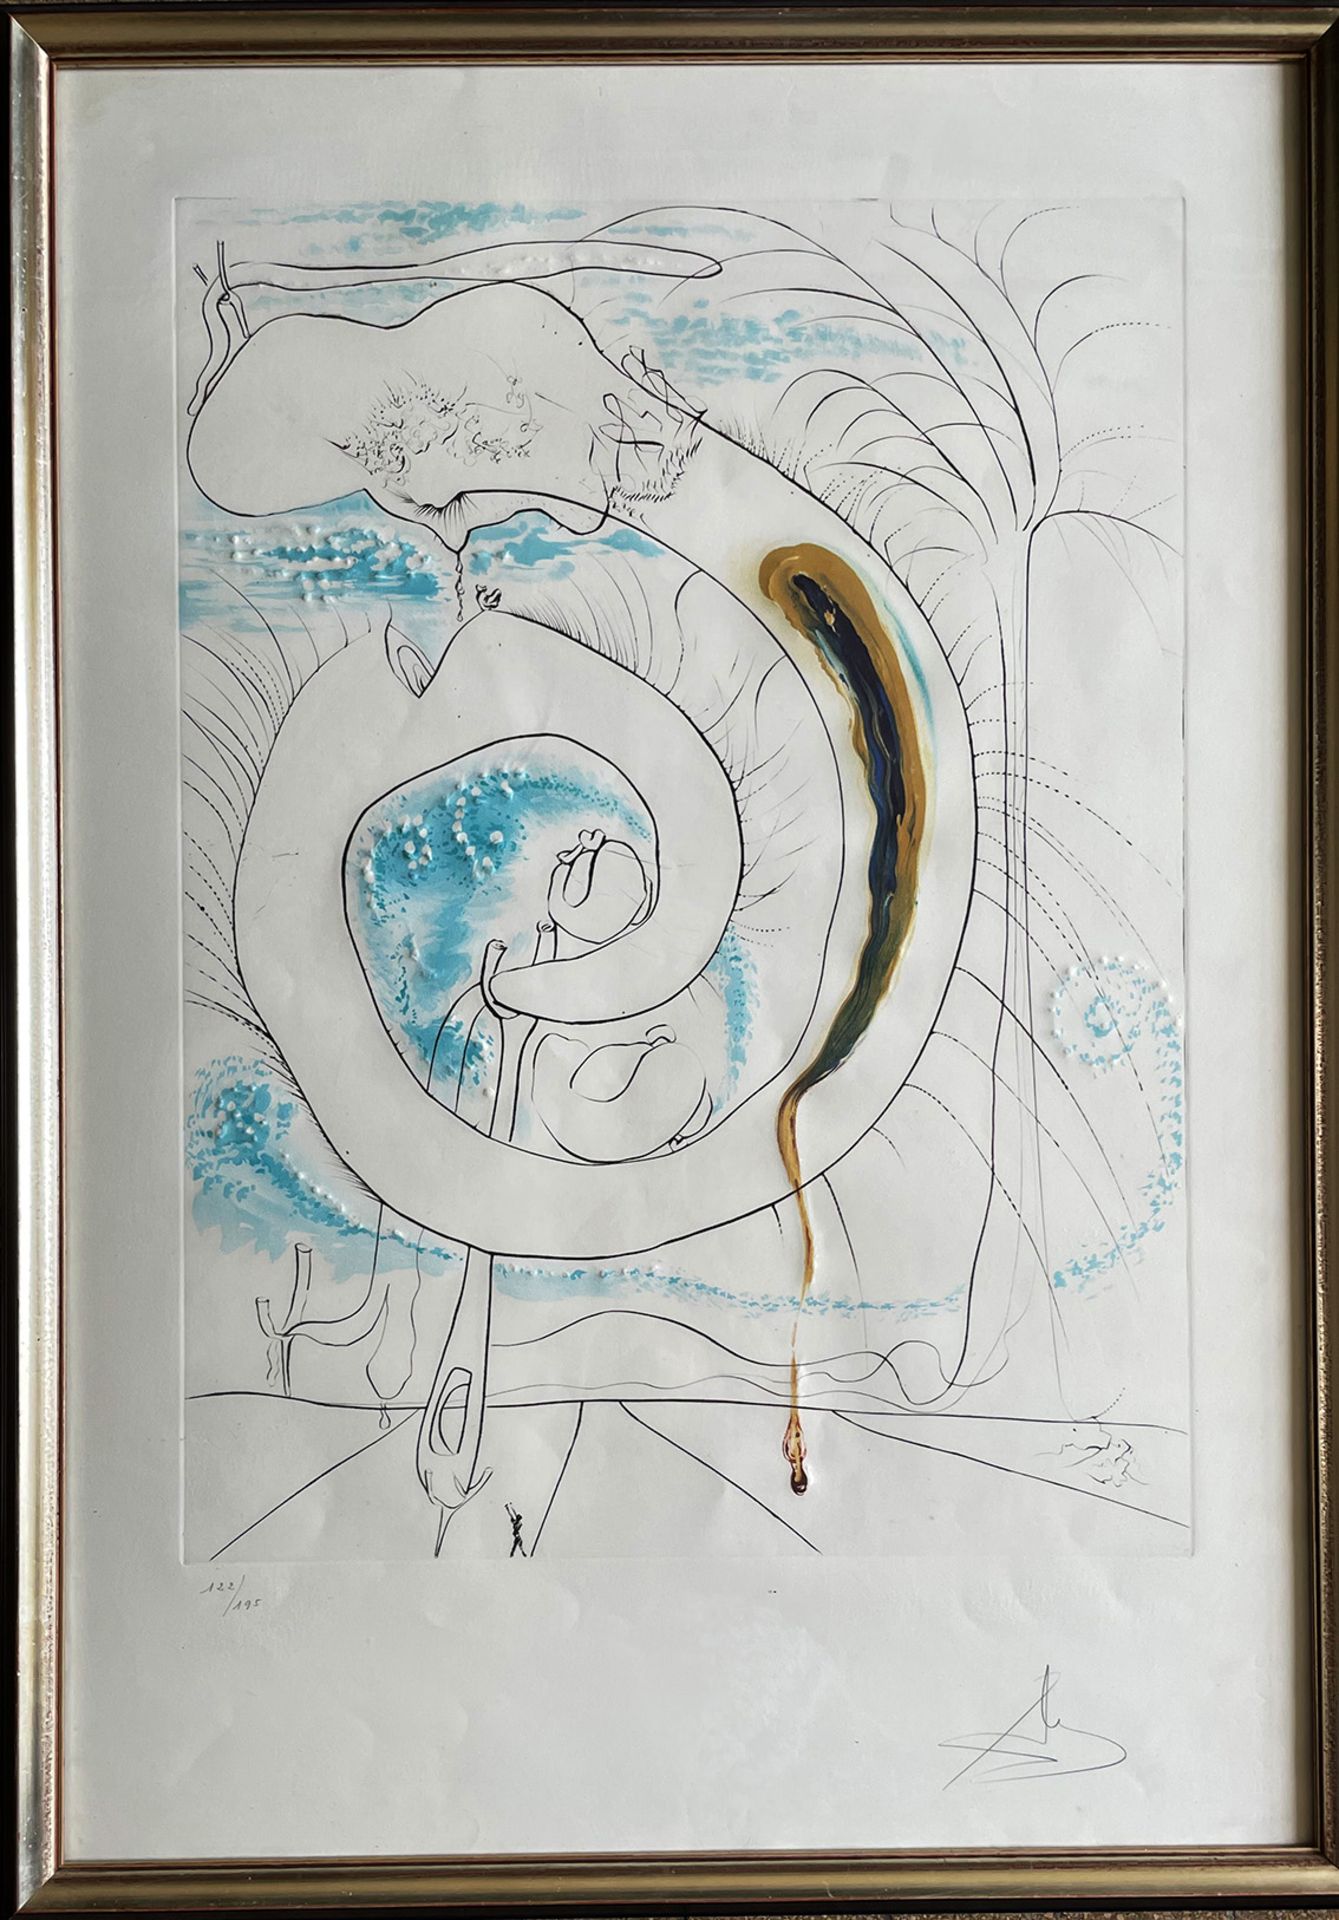 Salvador Dalí (Figueres, 1904 - 1989), "The visceral circle of the cosmos" Kaltnadel und